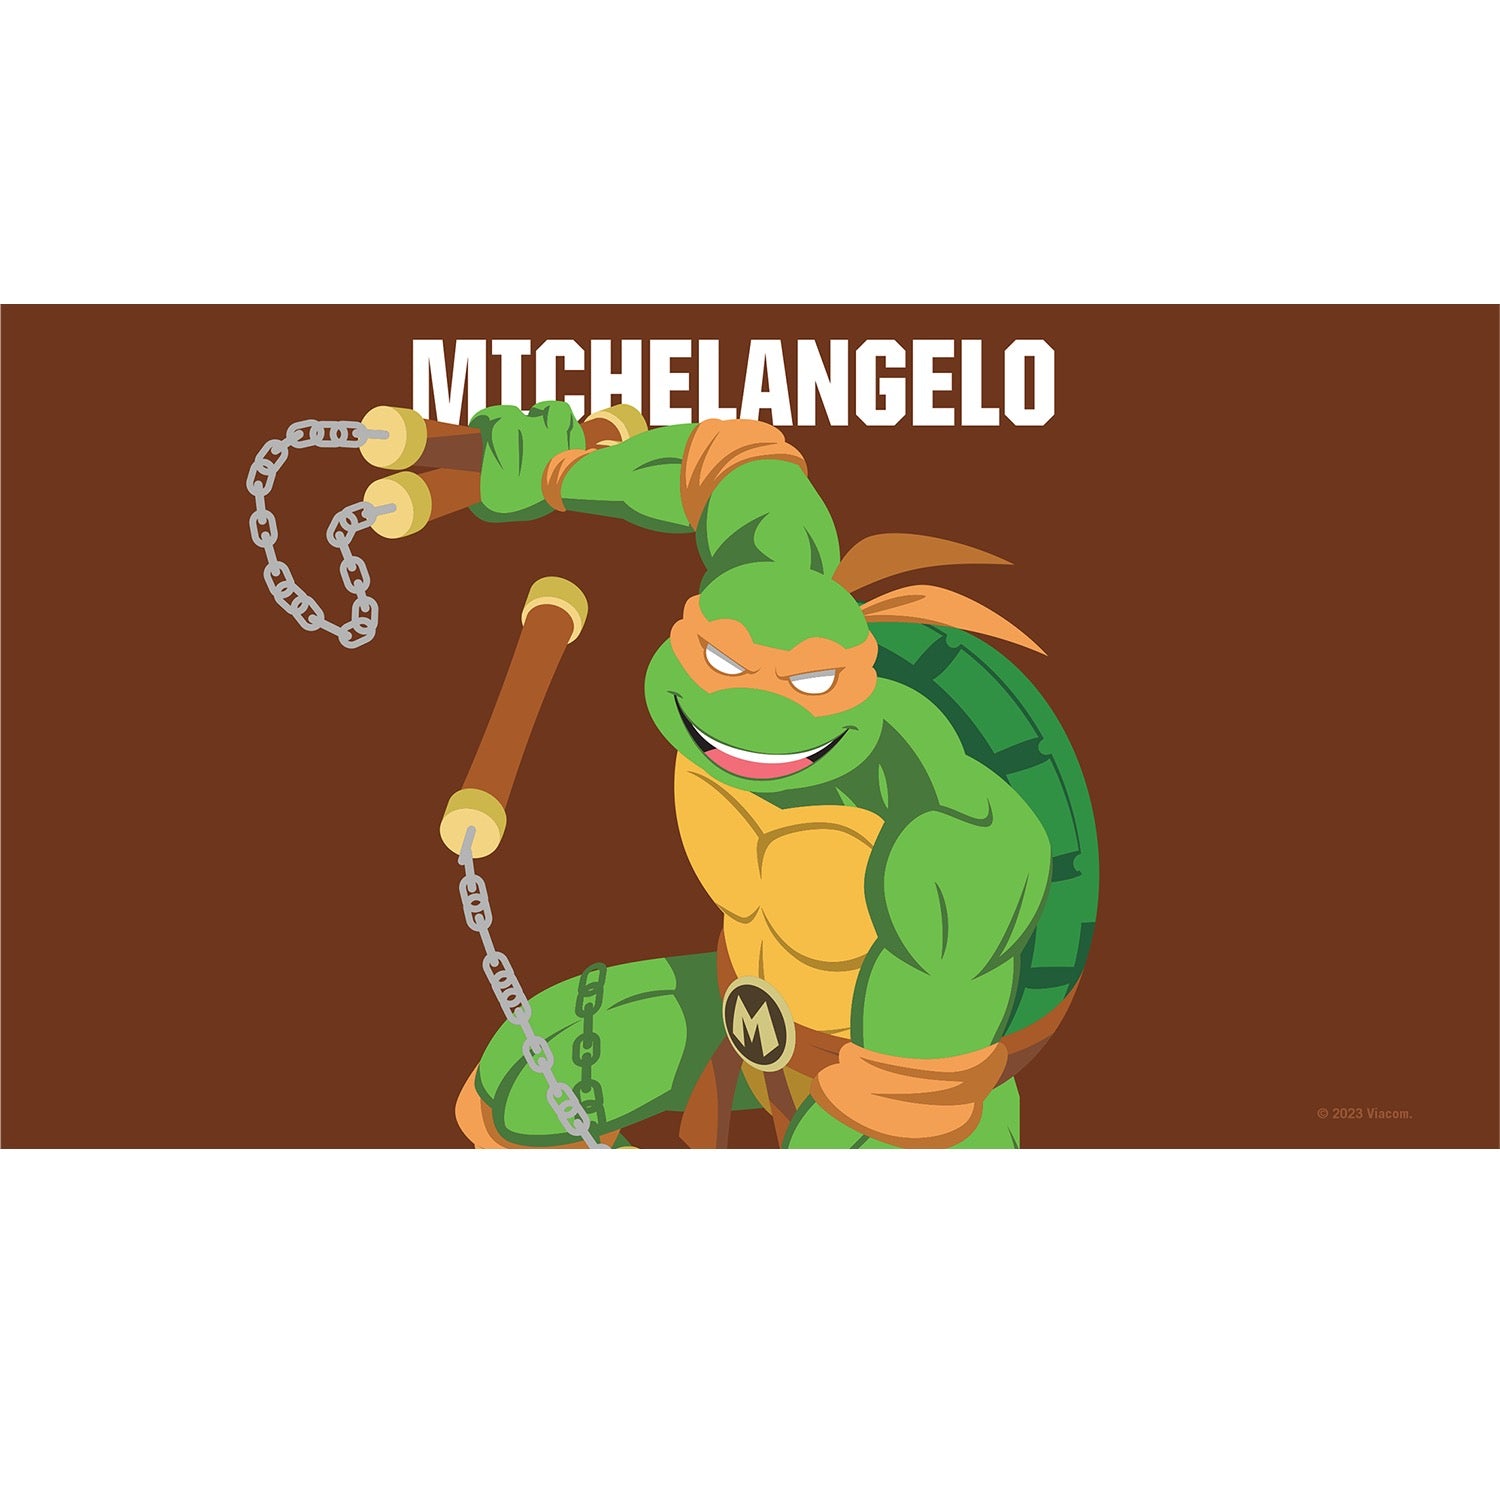 Teenage Mutant Ninja Turtles Michelangelo 17 oz Pint Glass - Paramount Shop